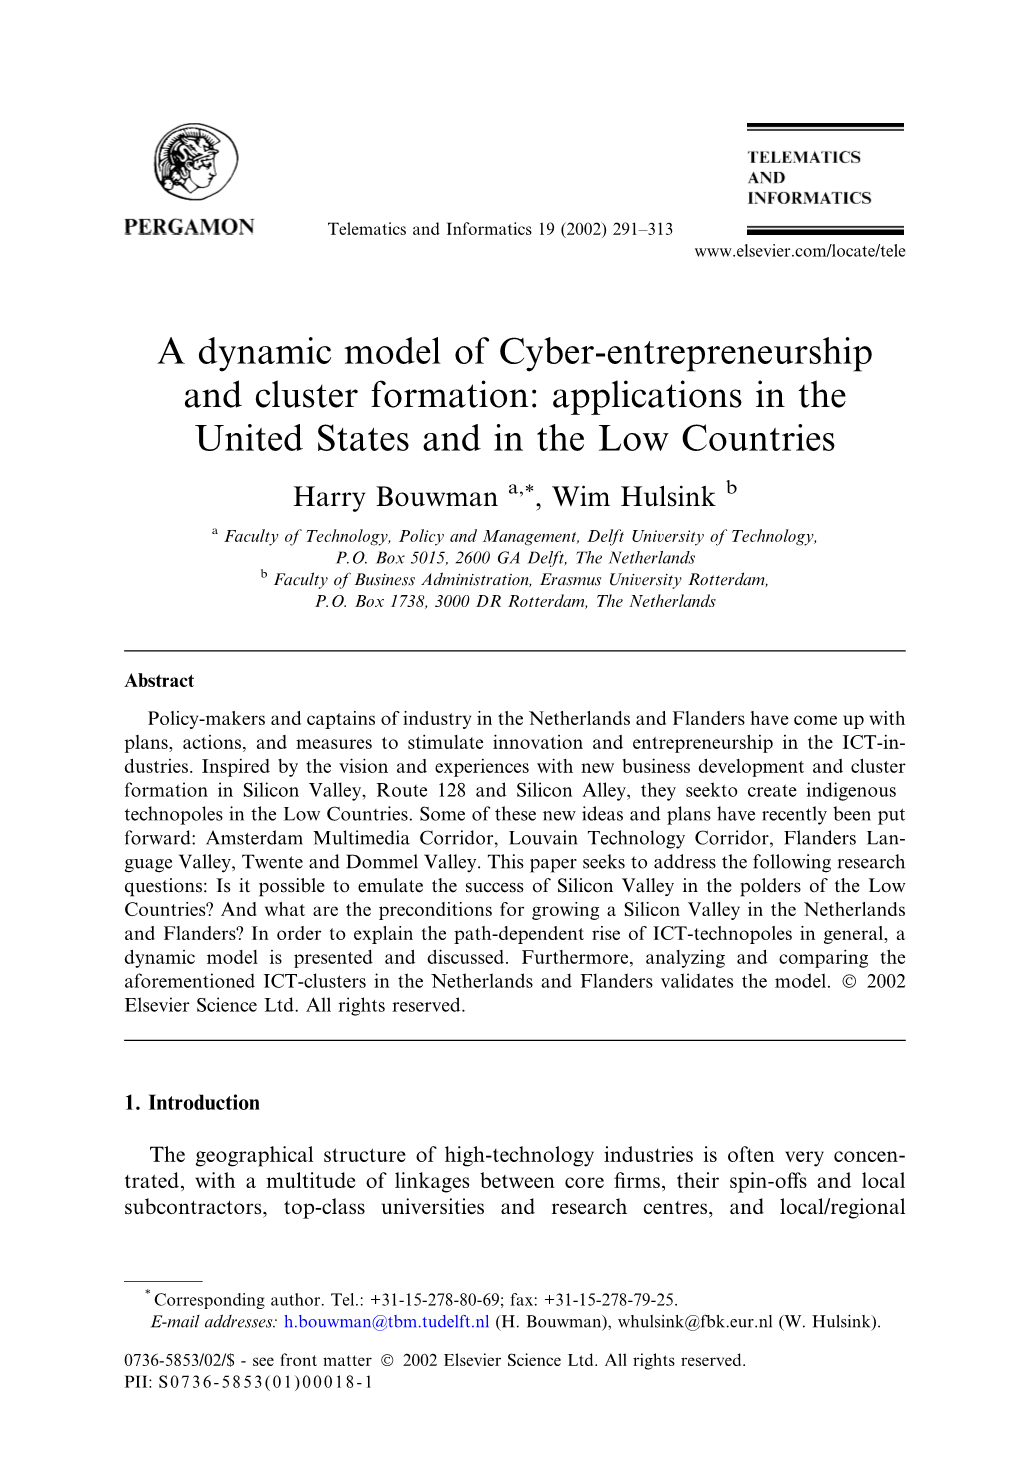 A Dynamic Model of Cyber-Entrepreneurship